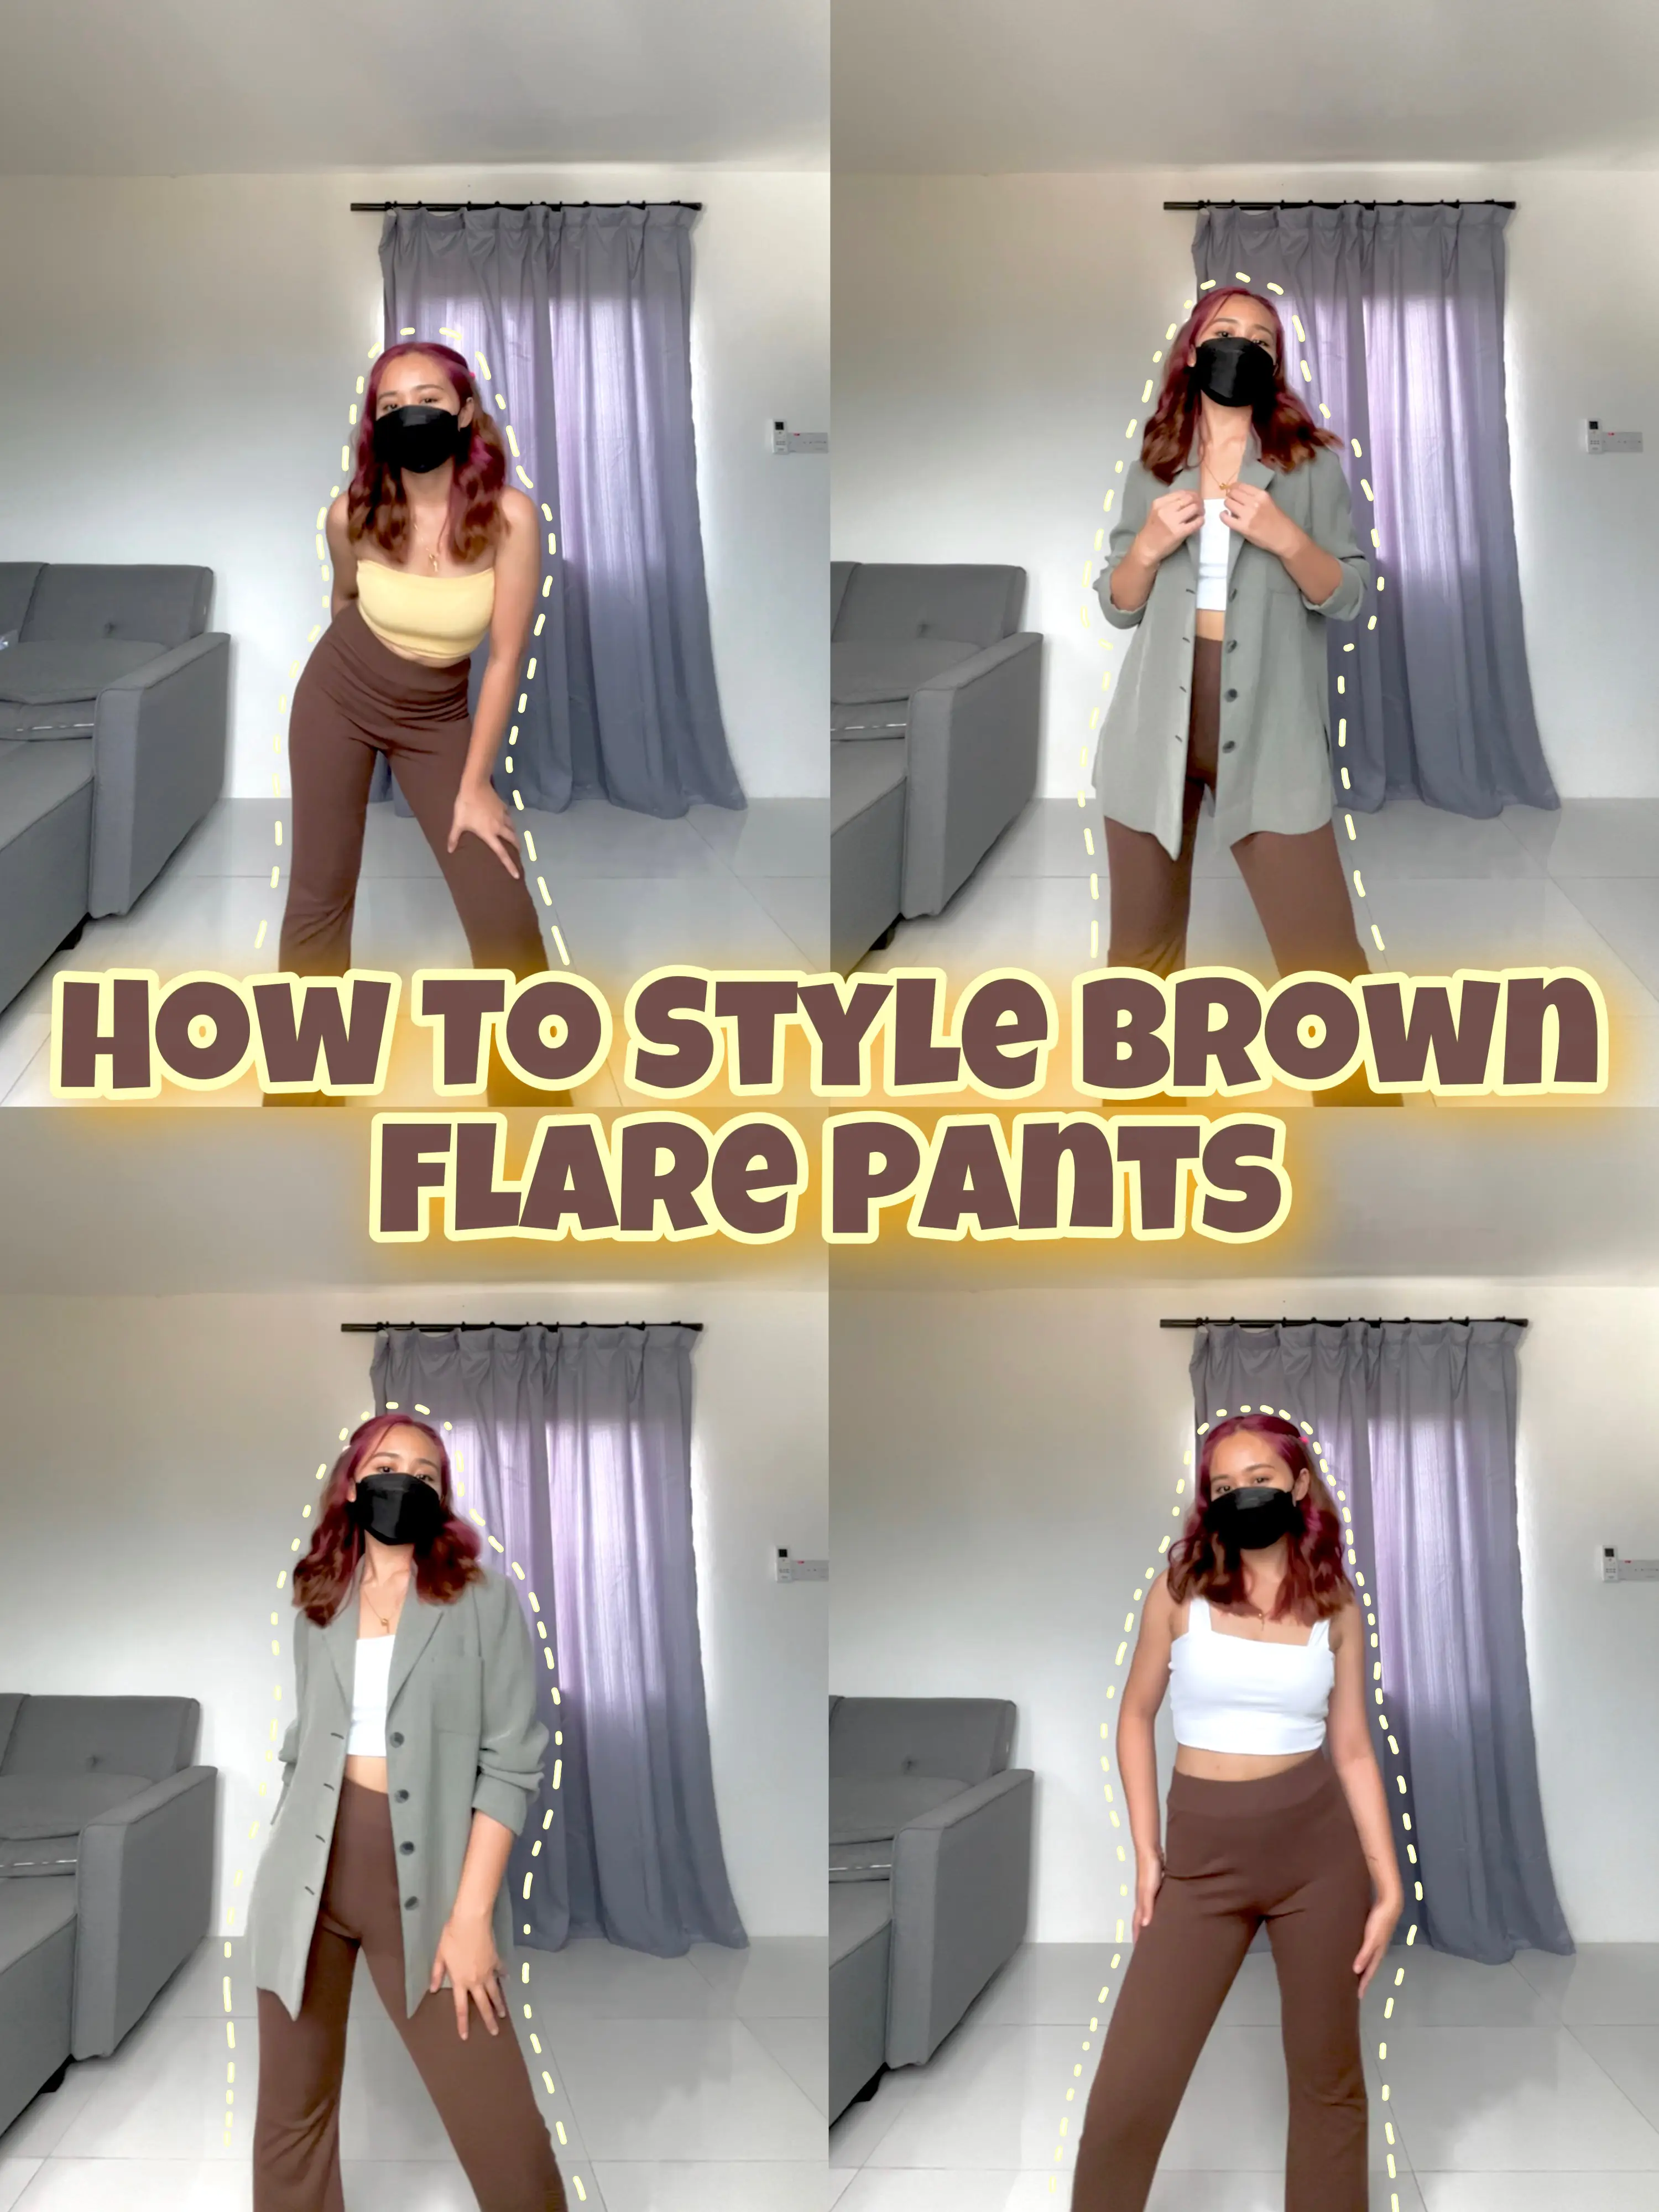 How To Style Brown Flare Pants, Video diterbitkan oleh ashantharosary